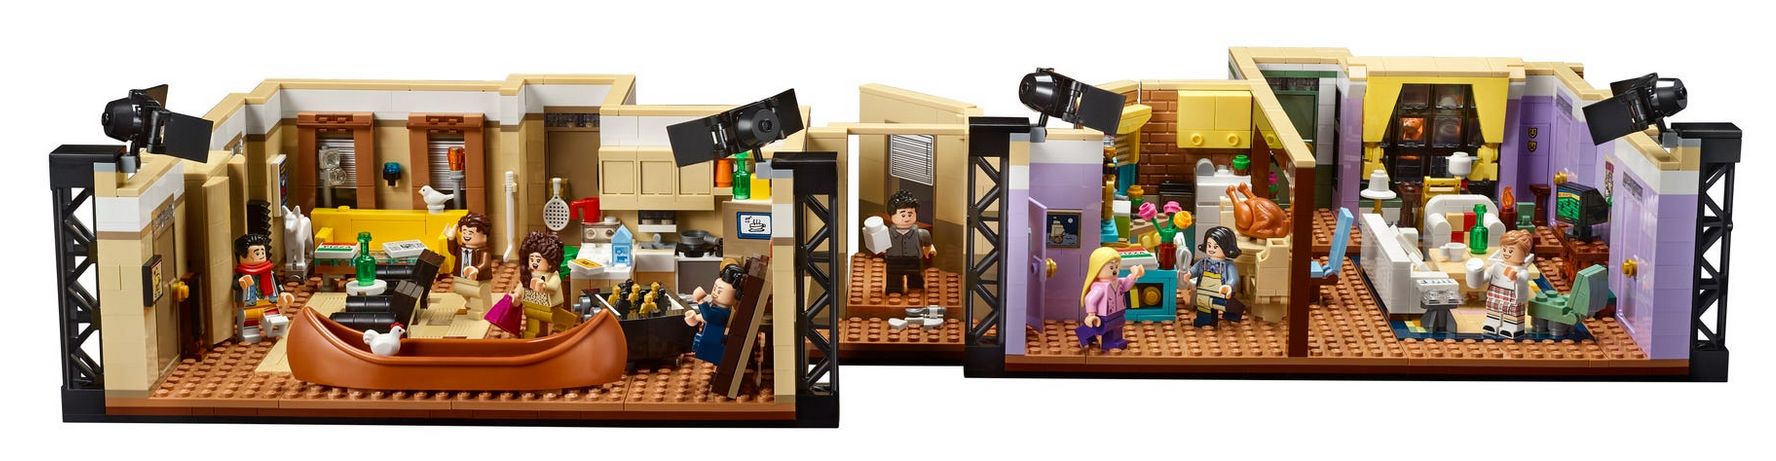 LEGO Friends The Apartments set (10292) image 1